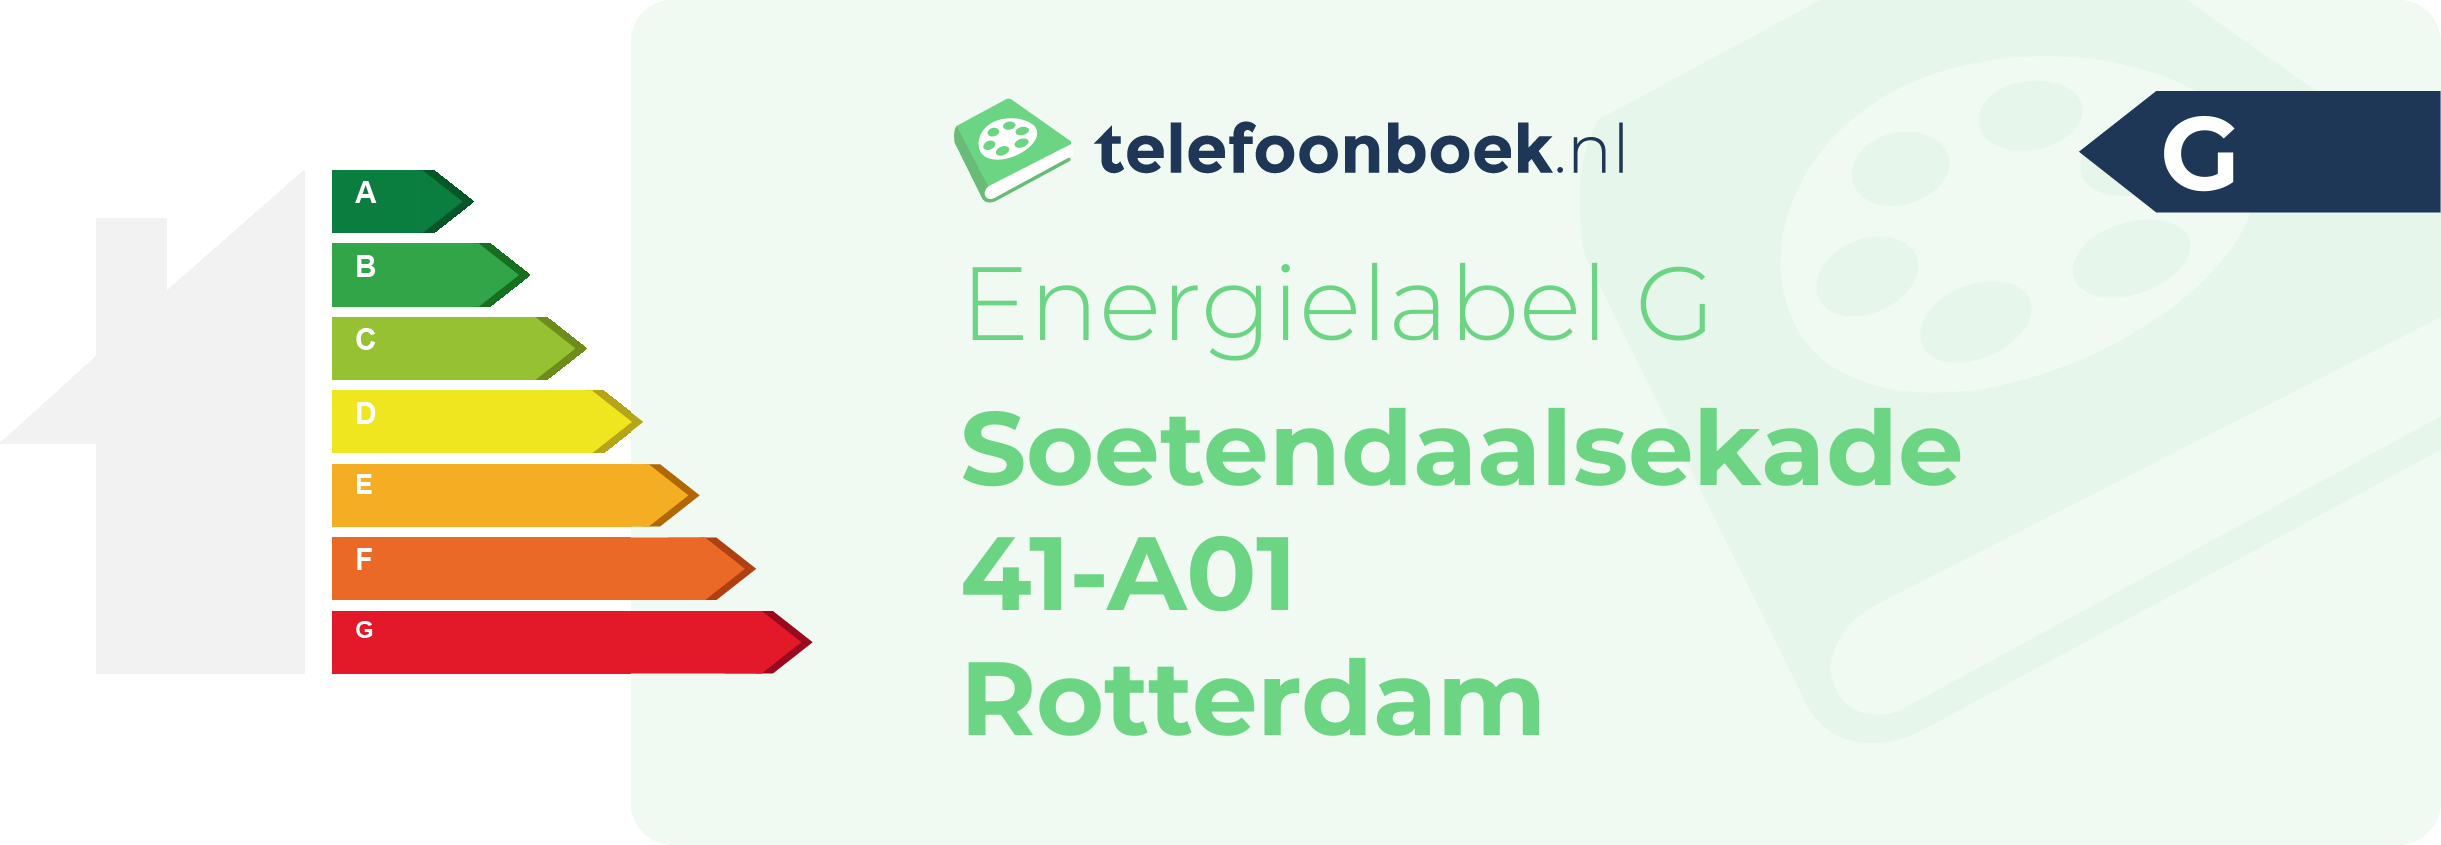 Energielabel Soetendaalsekade 41-A01 Rotterdam